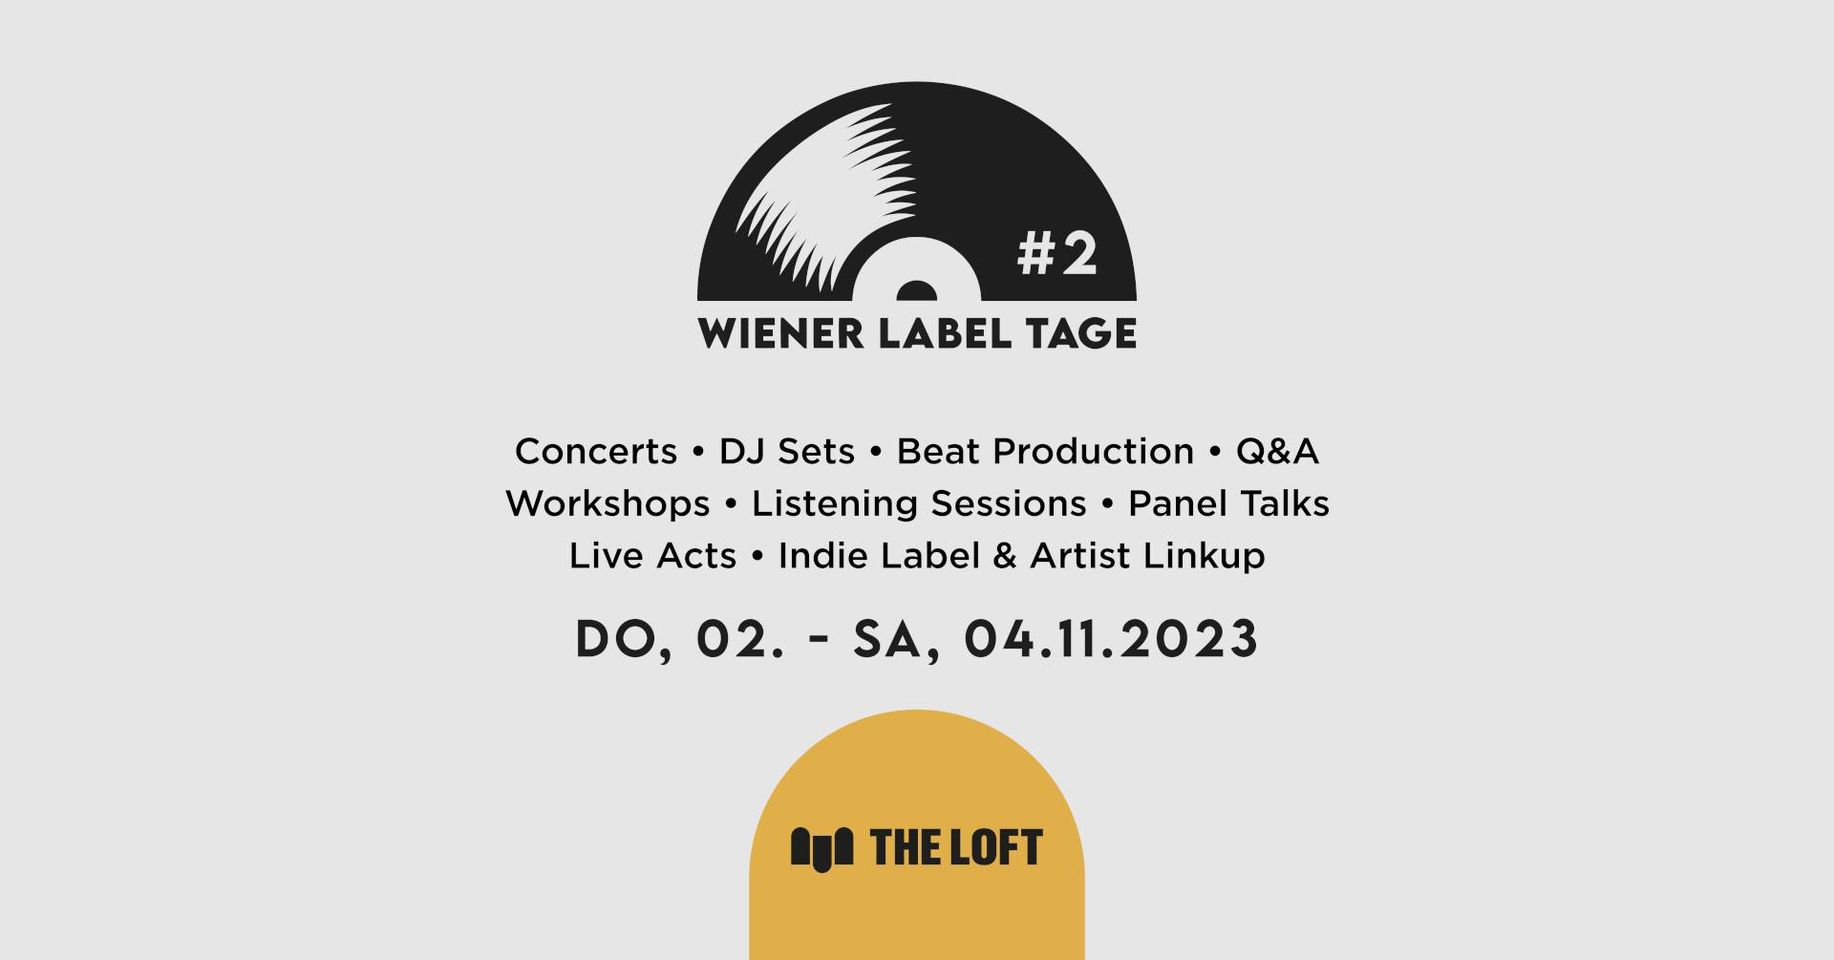 Wiener Label Tage #2 am 2. November 2023 @ The Loft.